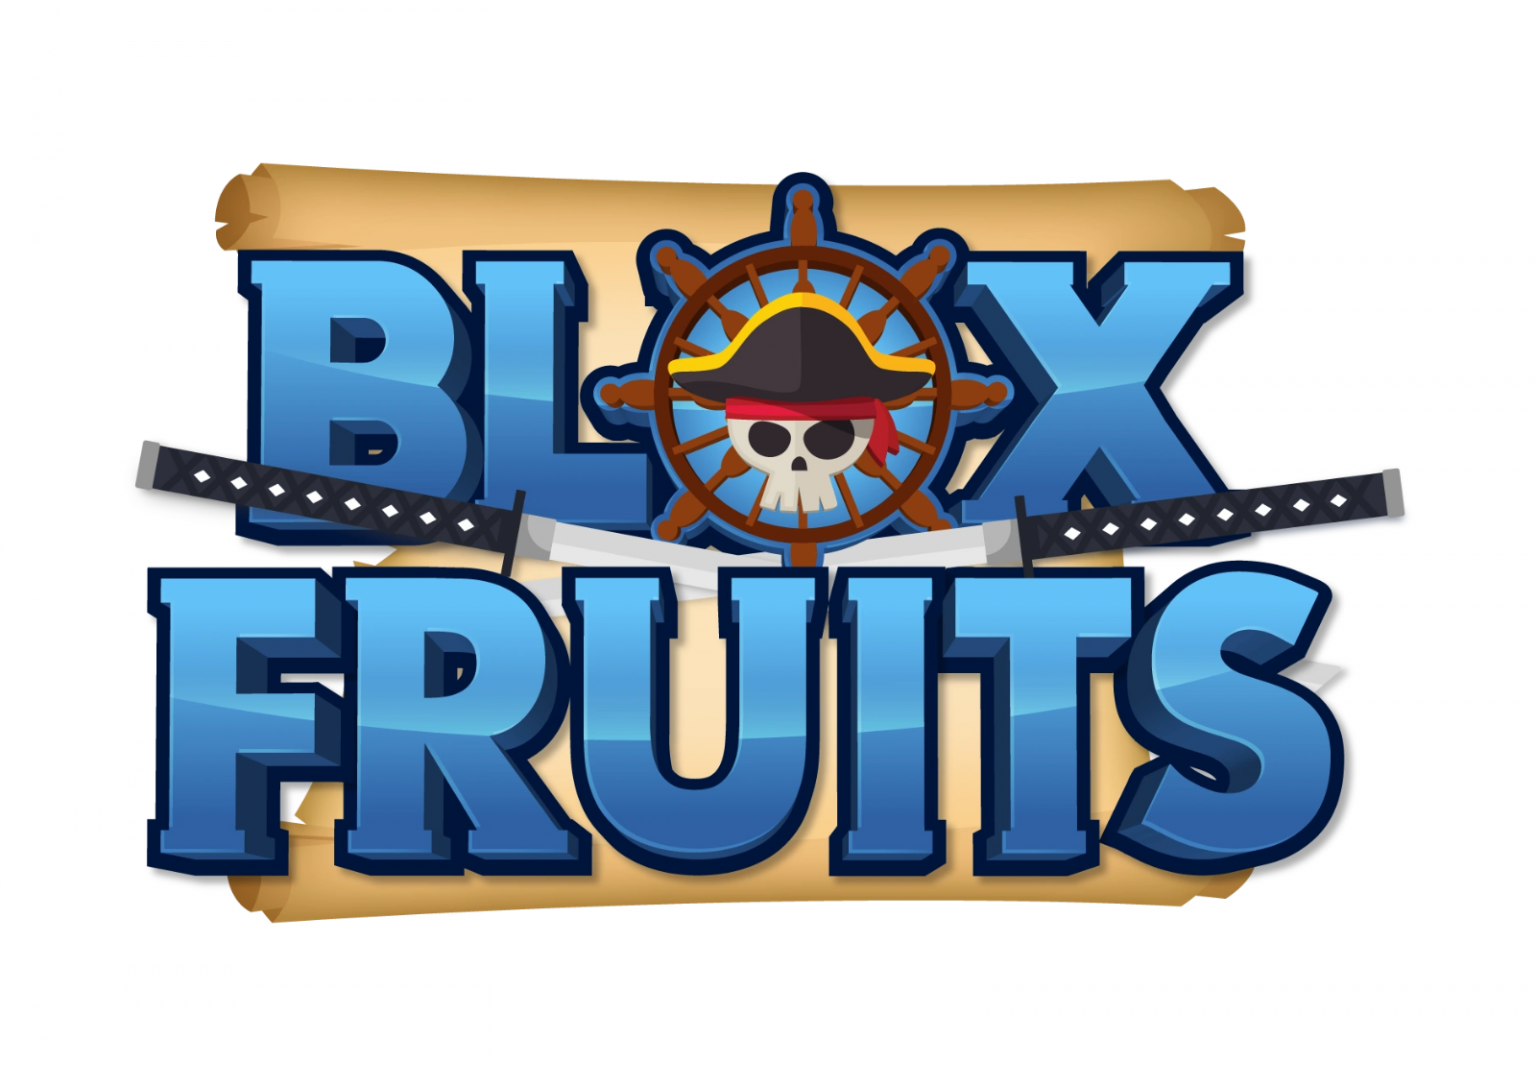 BLOX Fruits. РОБЛОКС BLOX Fruits. BLOX Fruits фрукты. Логотип Блокс фруит.